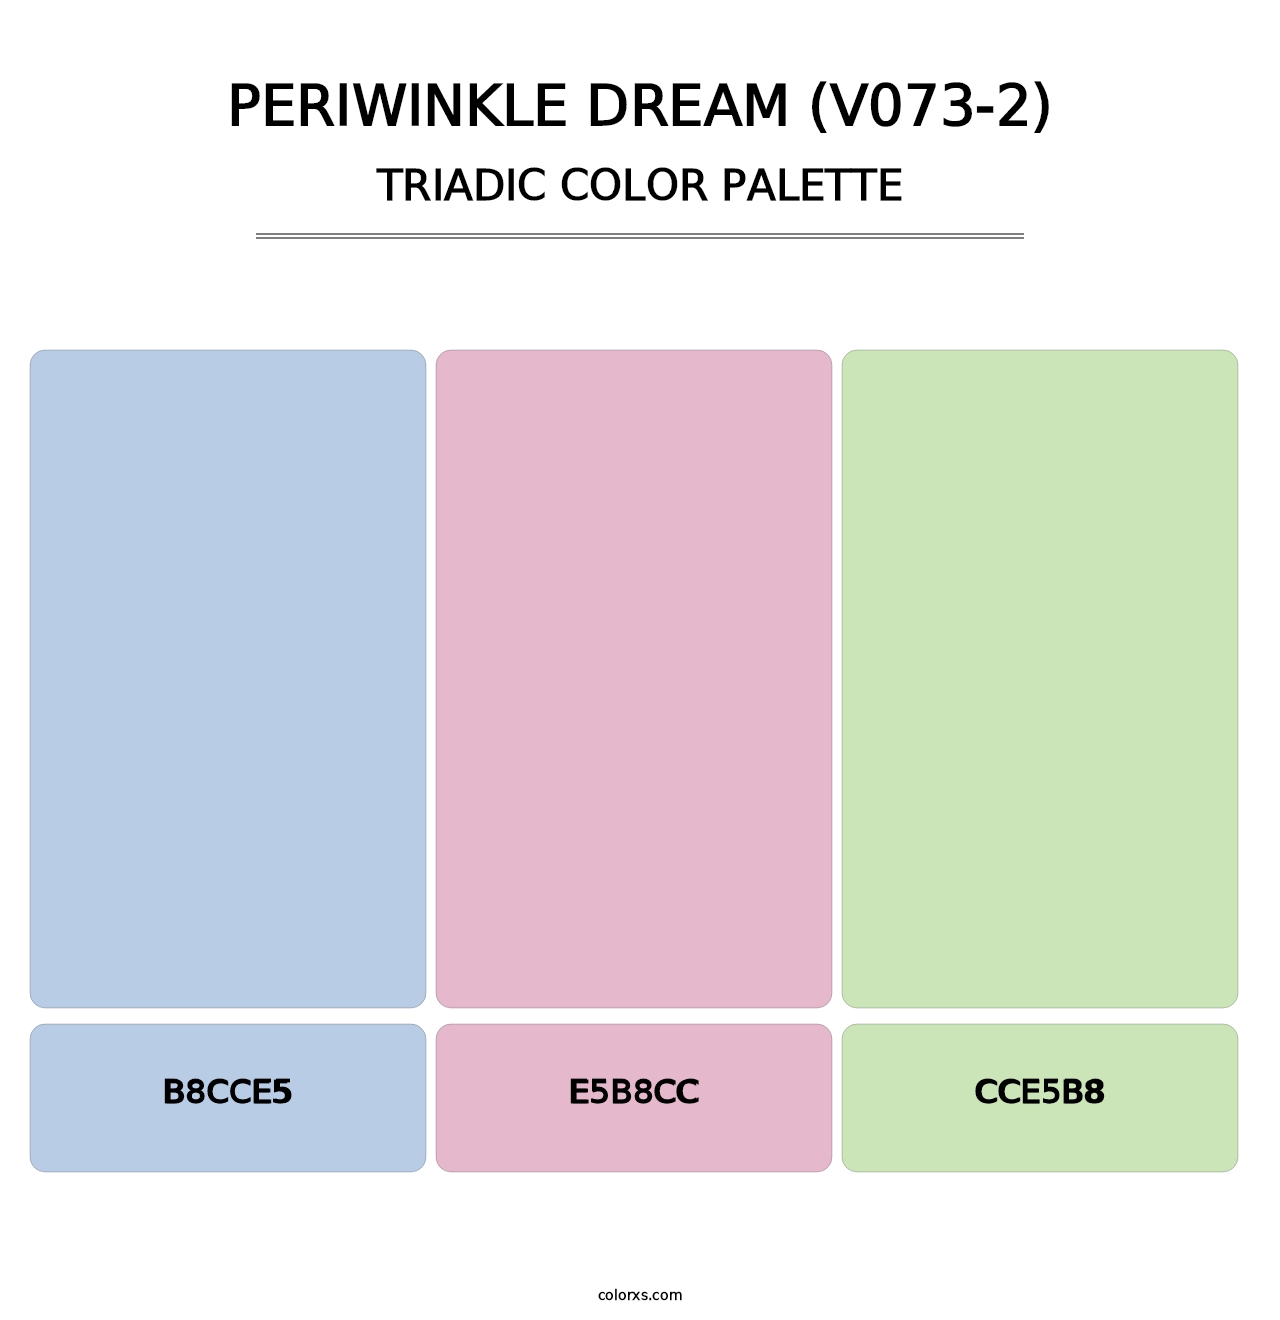 Periwinkle Dream (V073-2) - Triadic Color Palette